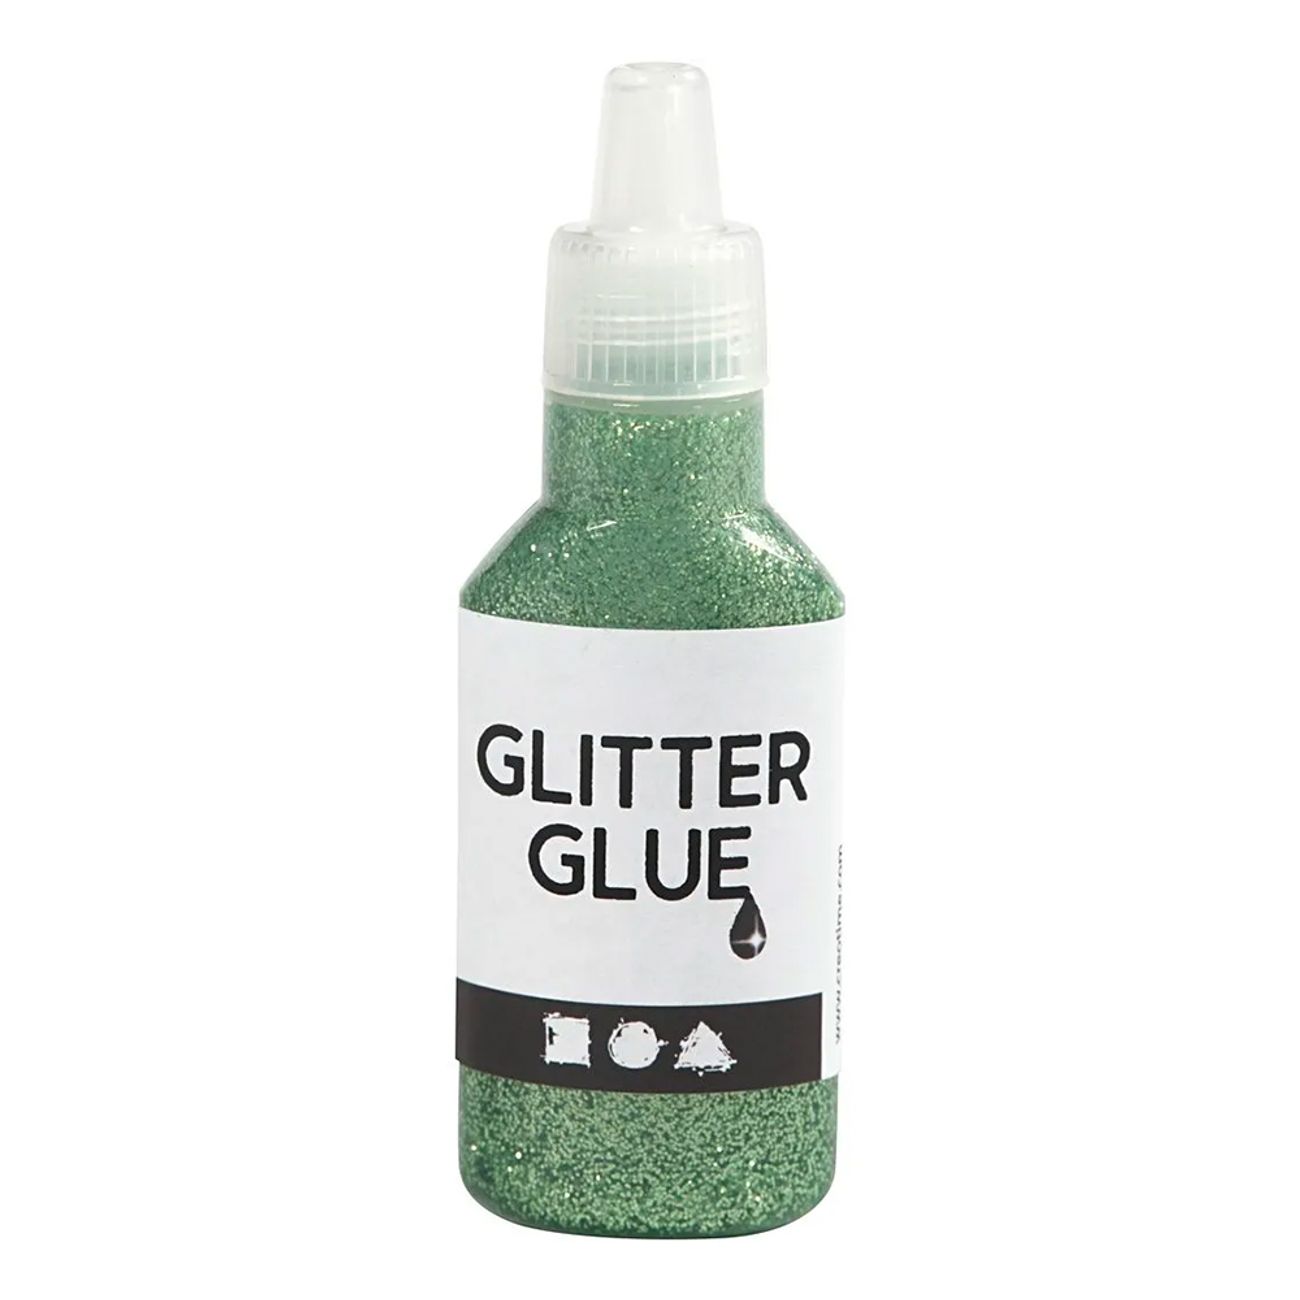 glitterlim-i-flaska-81874-12